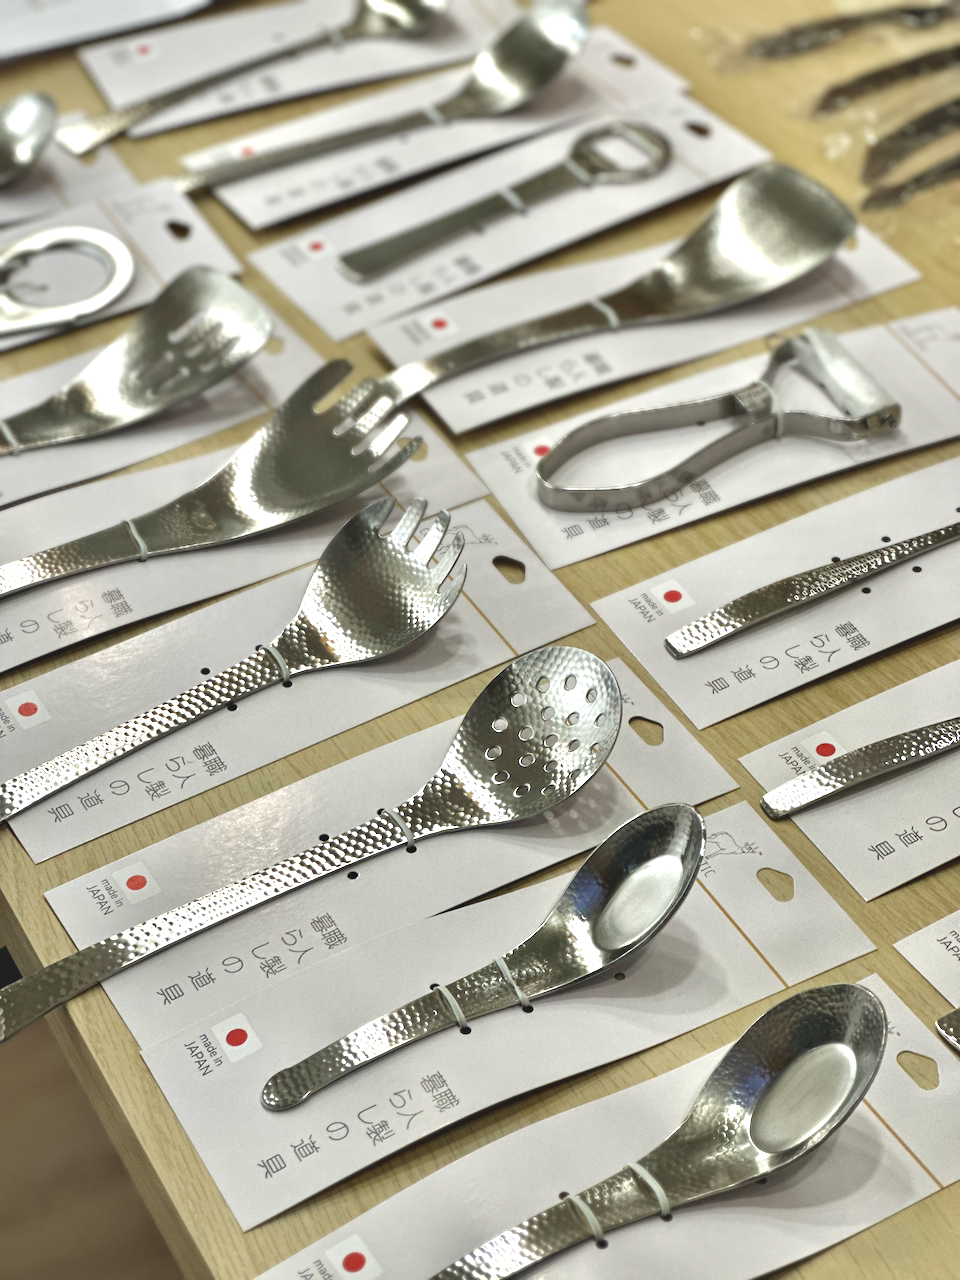 Yan Sanjo stainless steel round long handle spoon